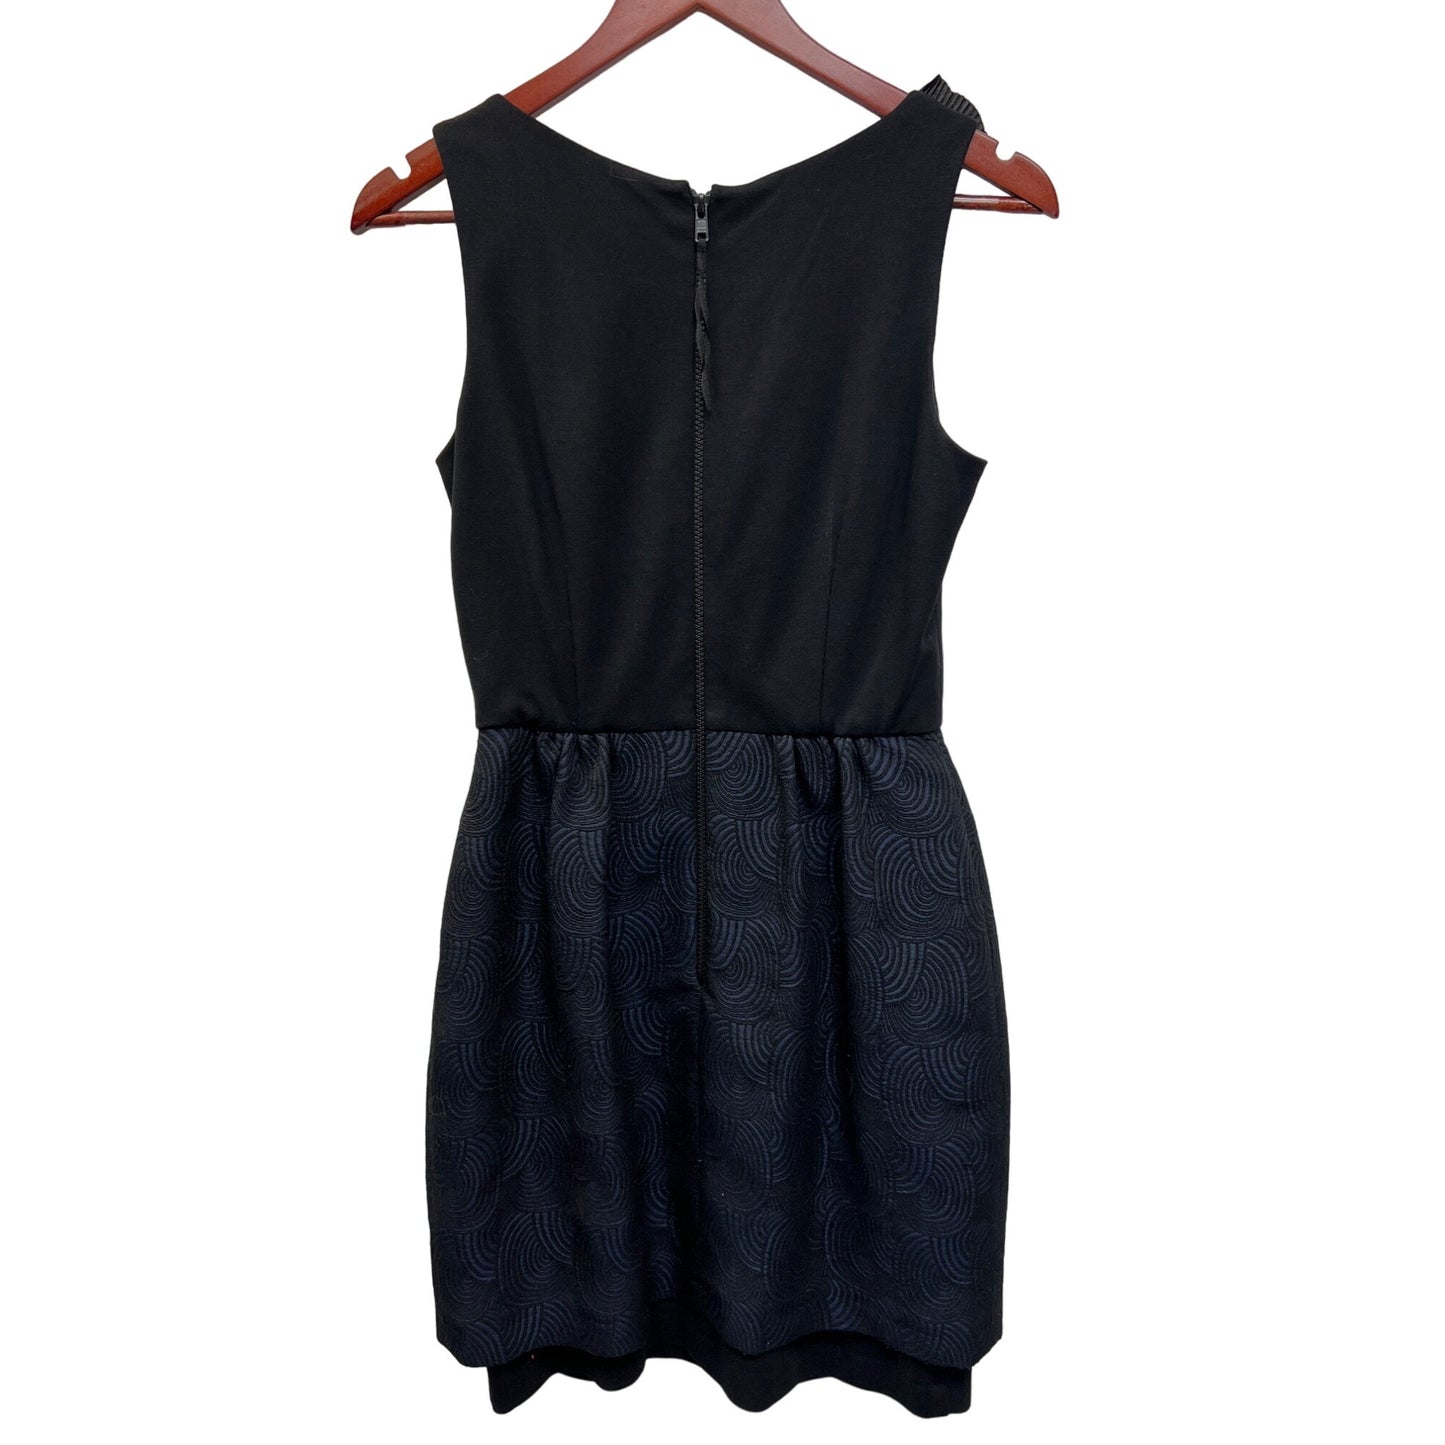 Taylor Navy and Black Swirl Design Sleeveless Sheath Dress